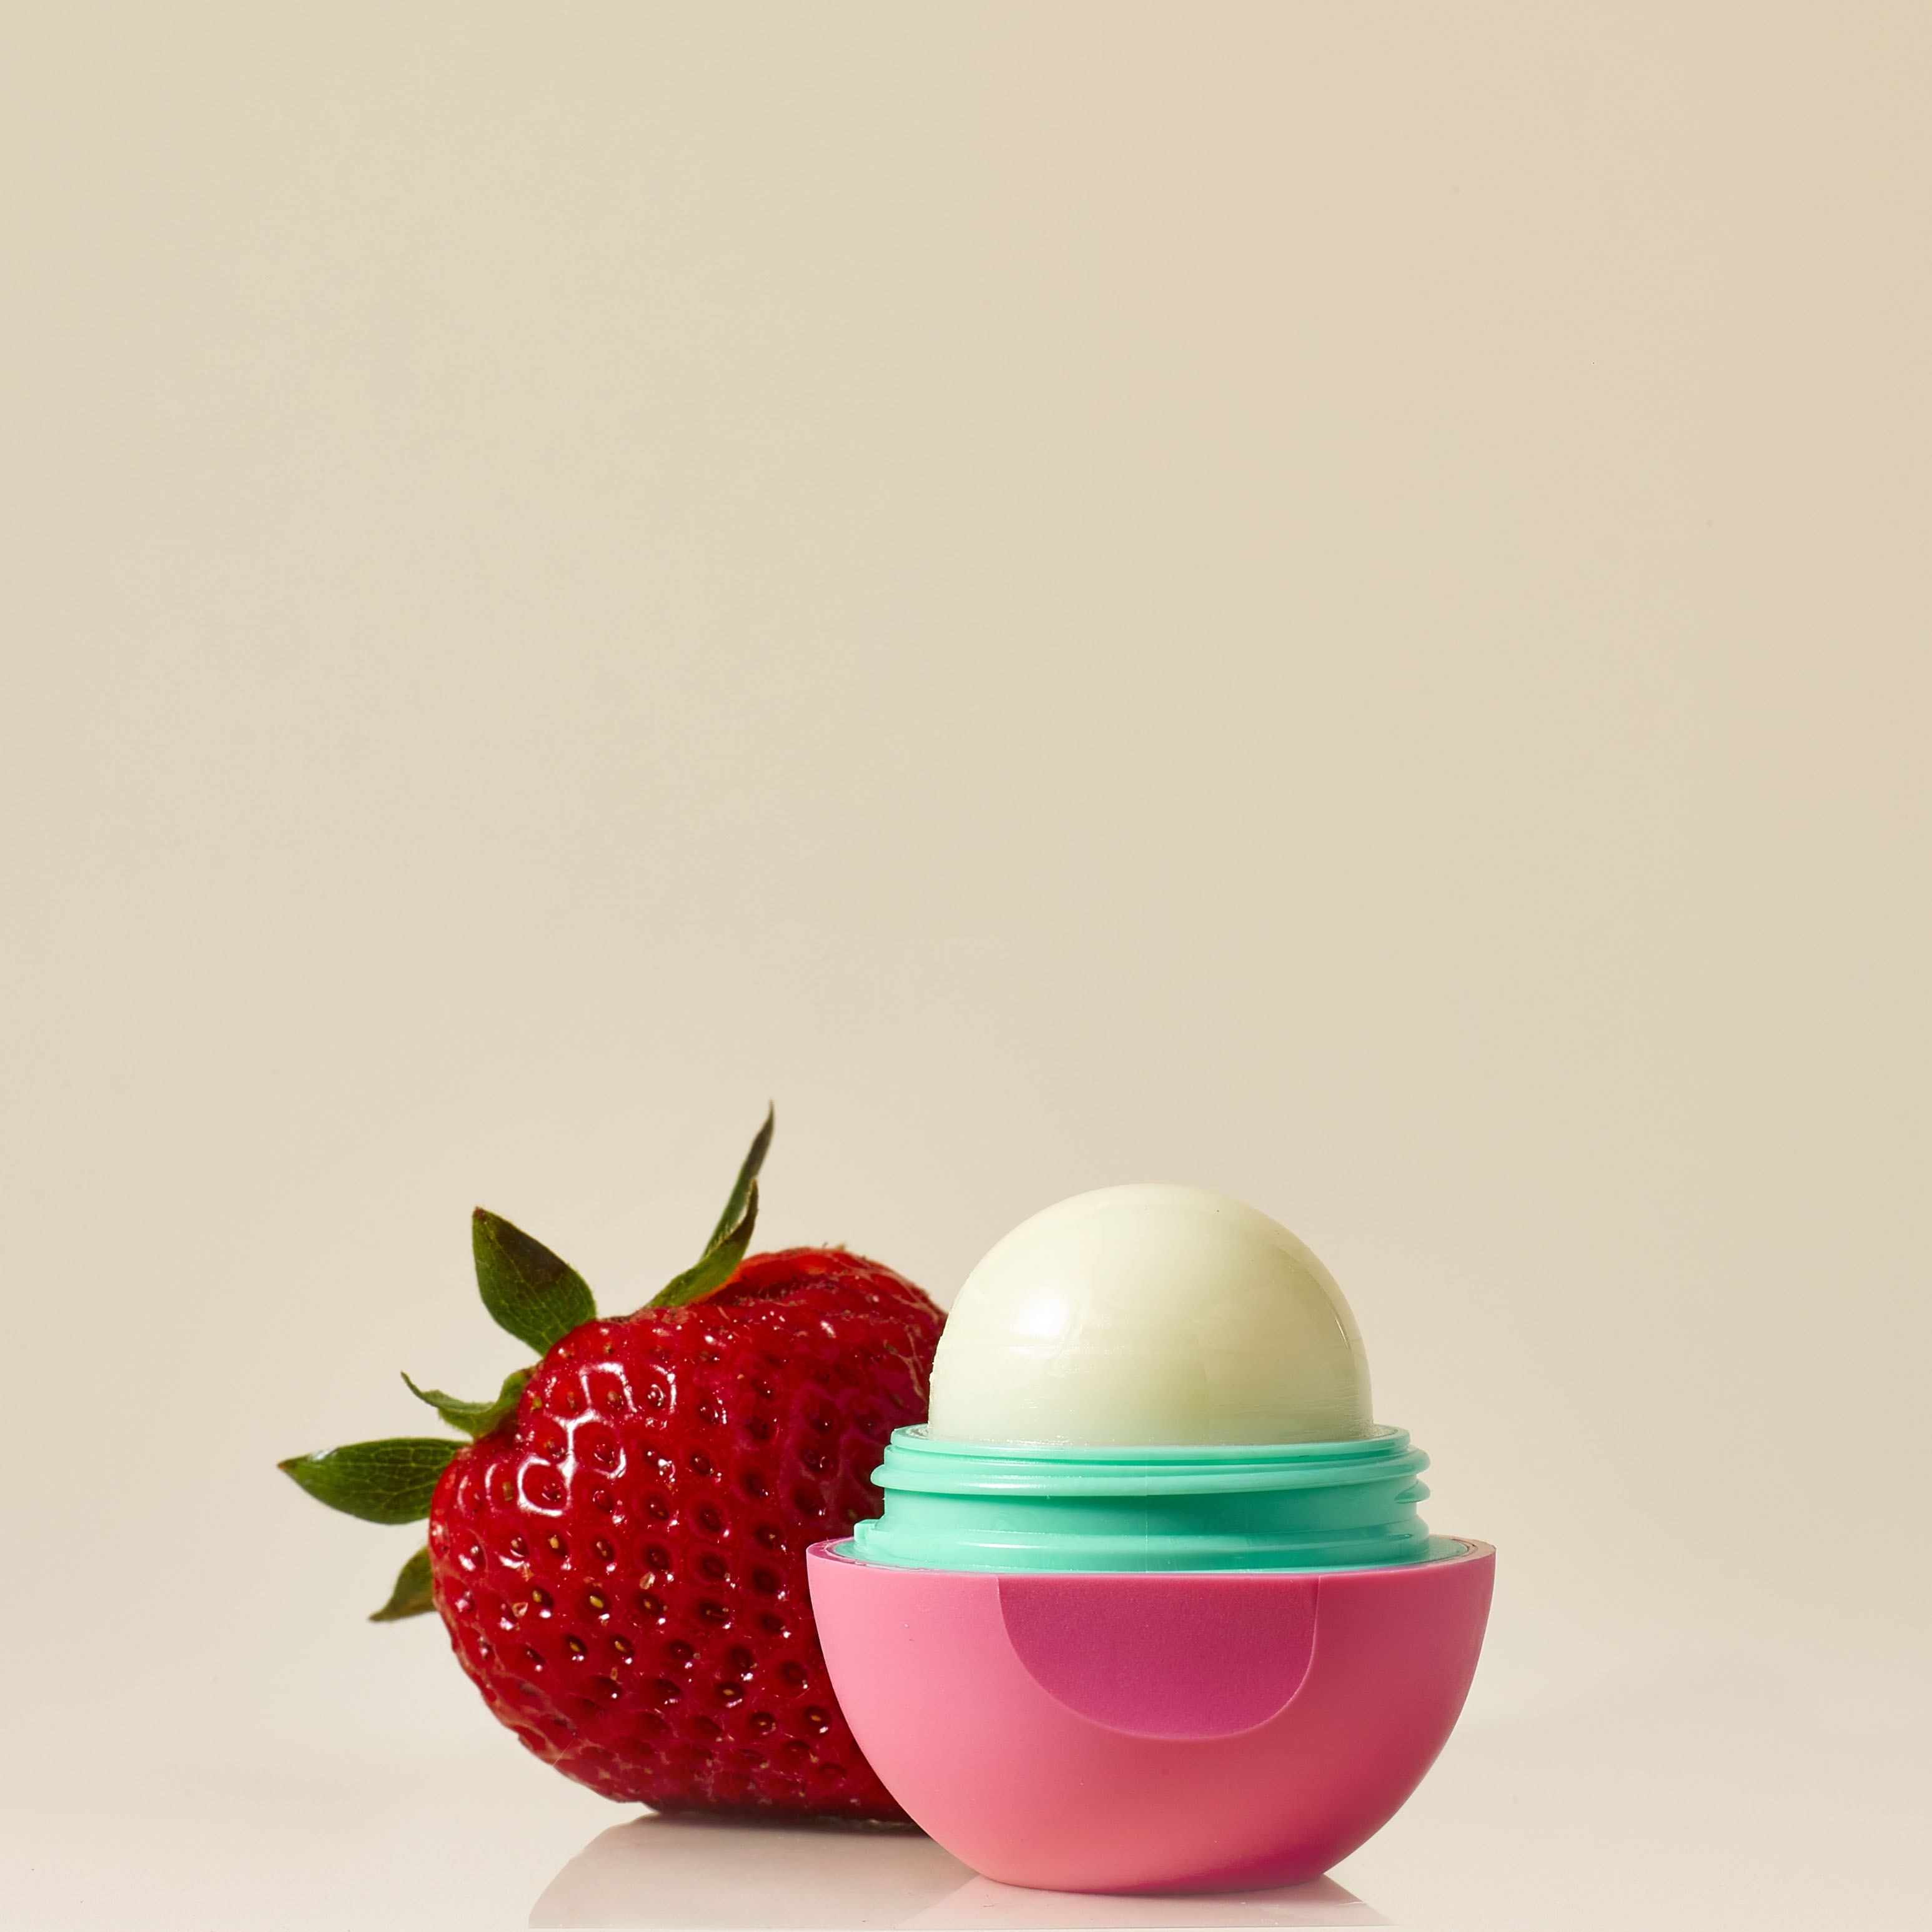 eos 100% Natural & Organic Lip Balm Sphere - Strawberry Sorbet | 0.25 oz - image 4 of 9